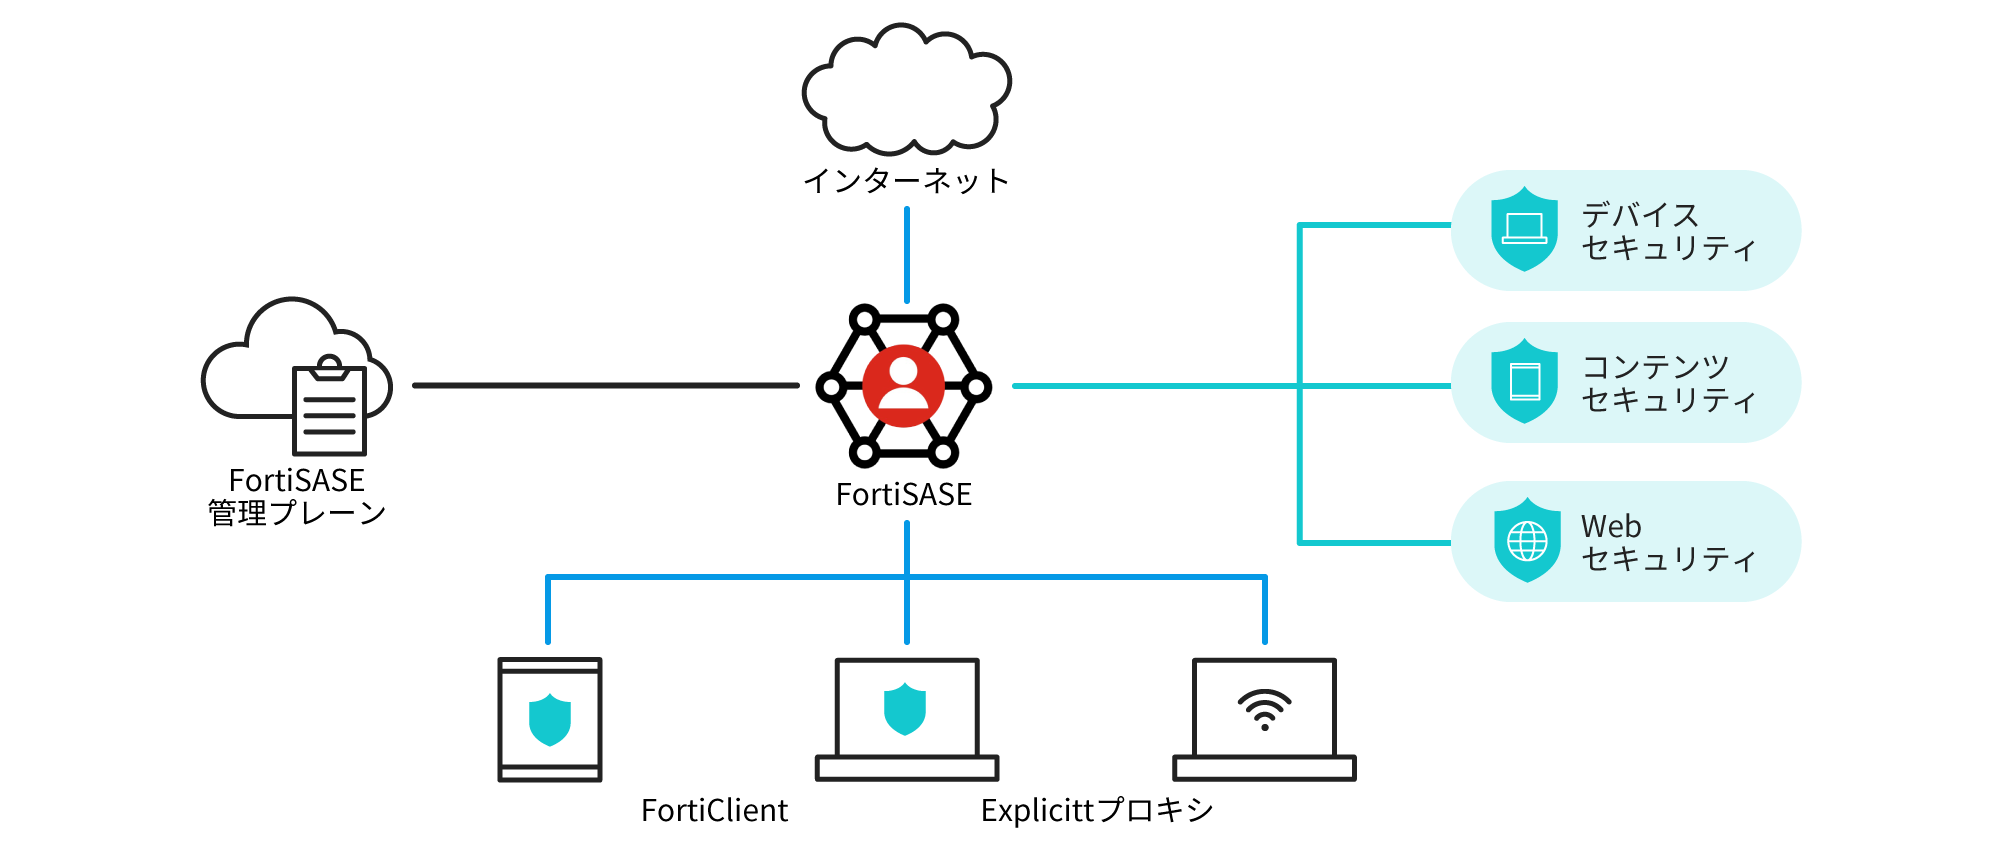 FortiClientとExplicittプロキシをつかい、FortiSASEからインターネットにアクセス。FortiClient管理プレーンと3つのセキュリティ (デバイスセキュリティ、コンテンツセキュリティ、Webセキュリティ)でセキュリティ対策。